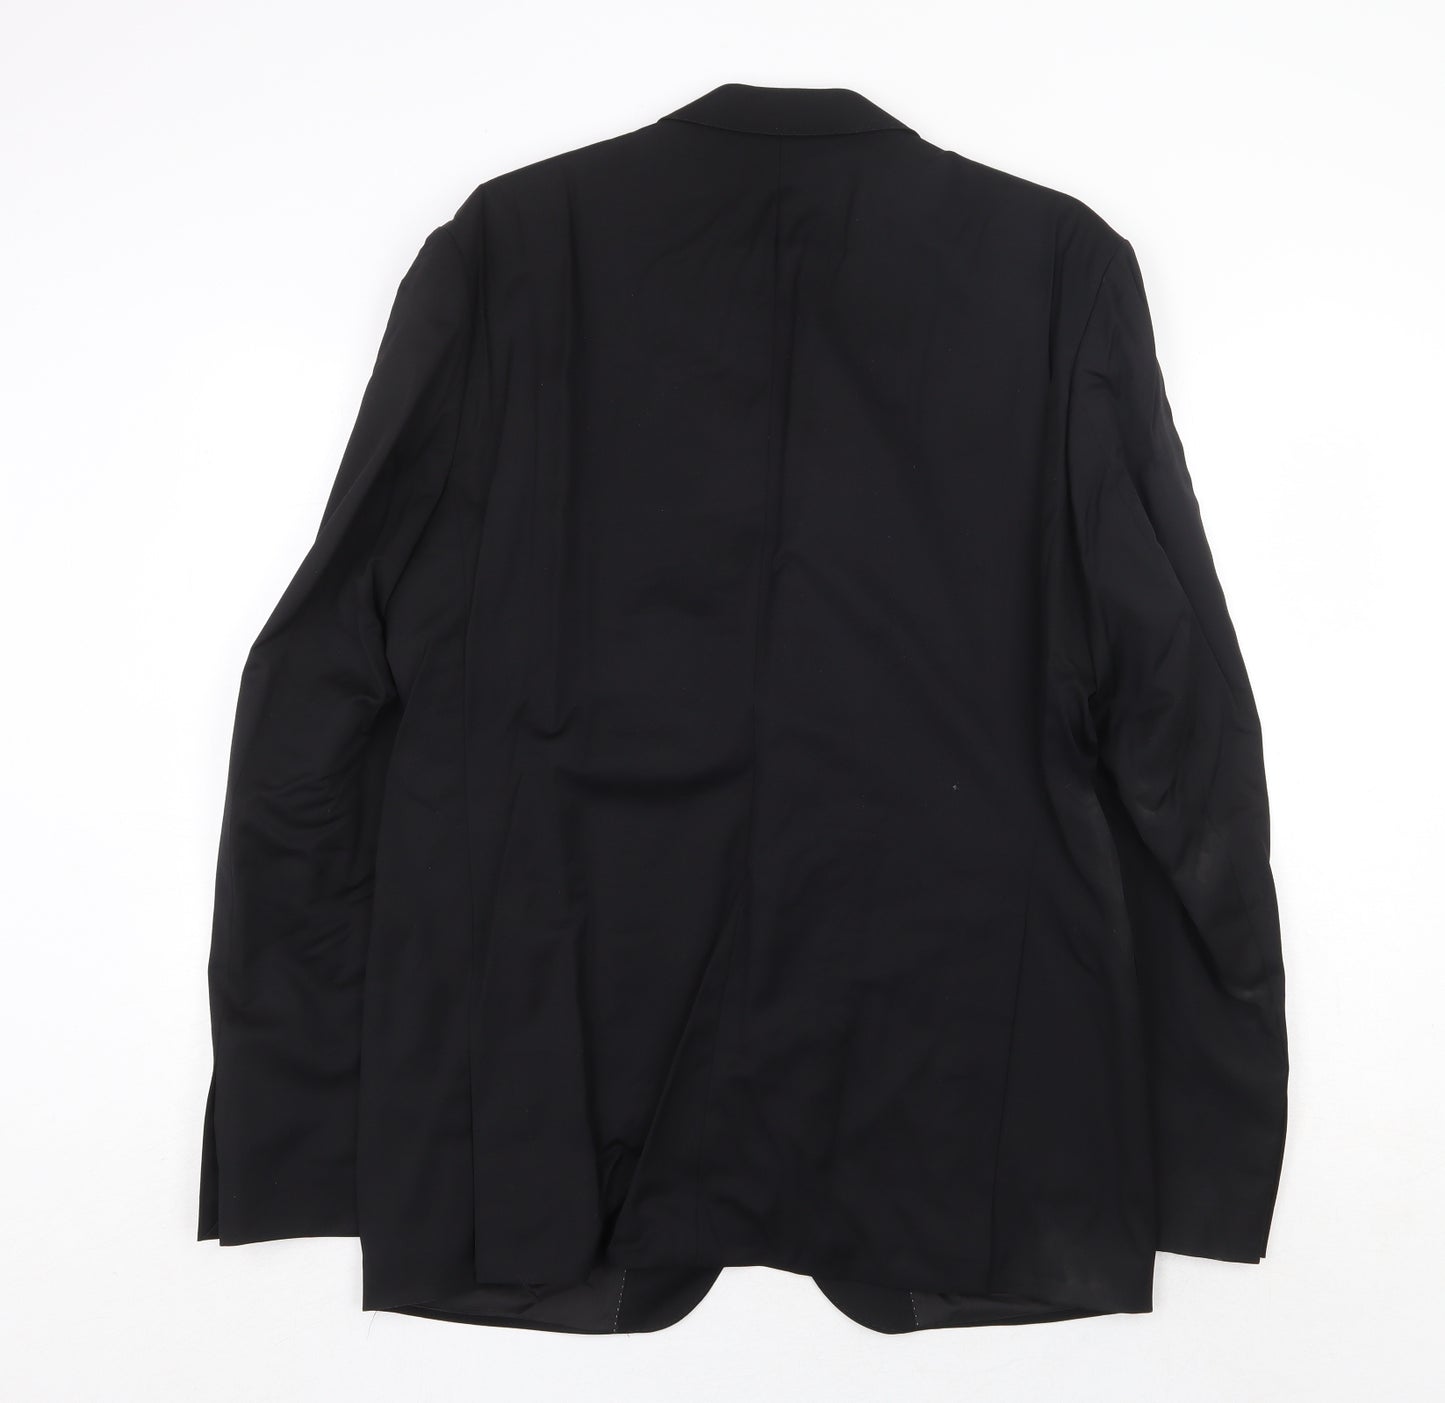 ROY ROBSON Mens Black Wool Jacket Suit Jacket Size 50 Regular